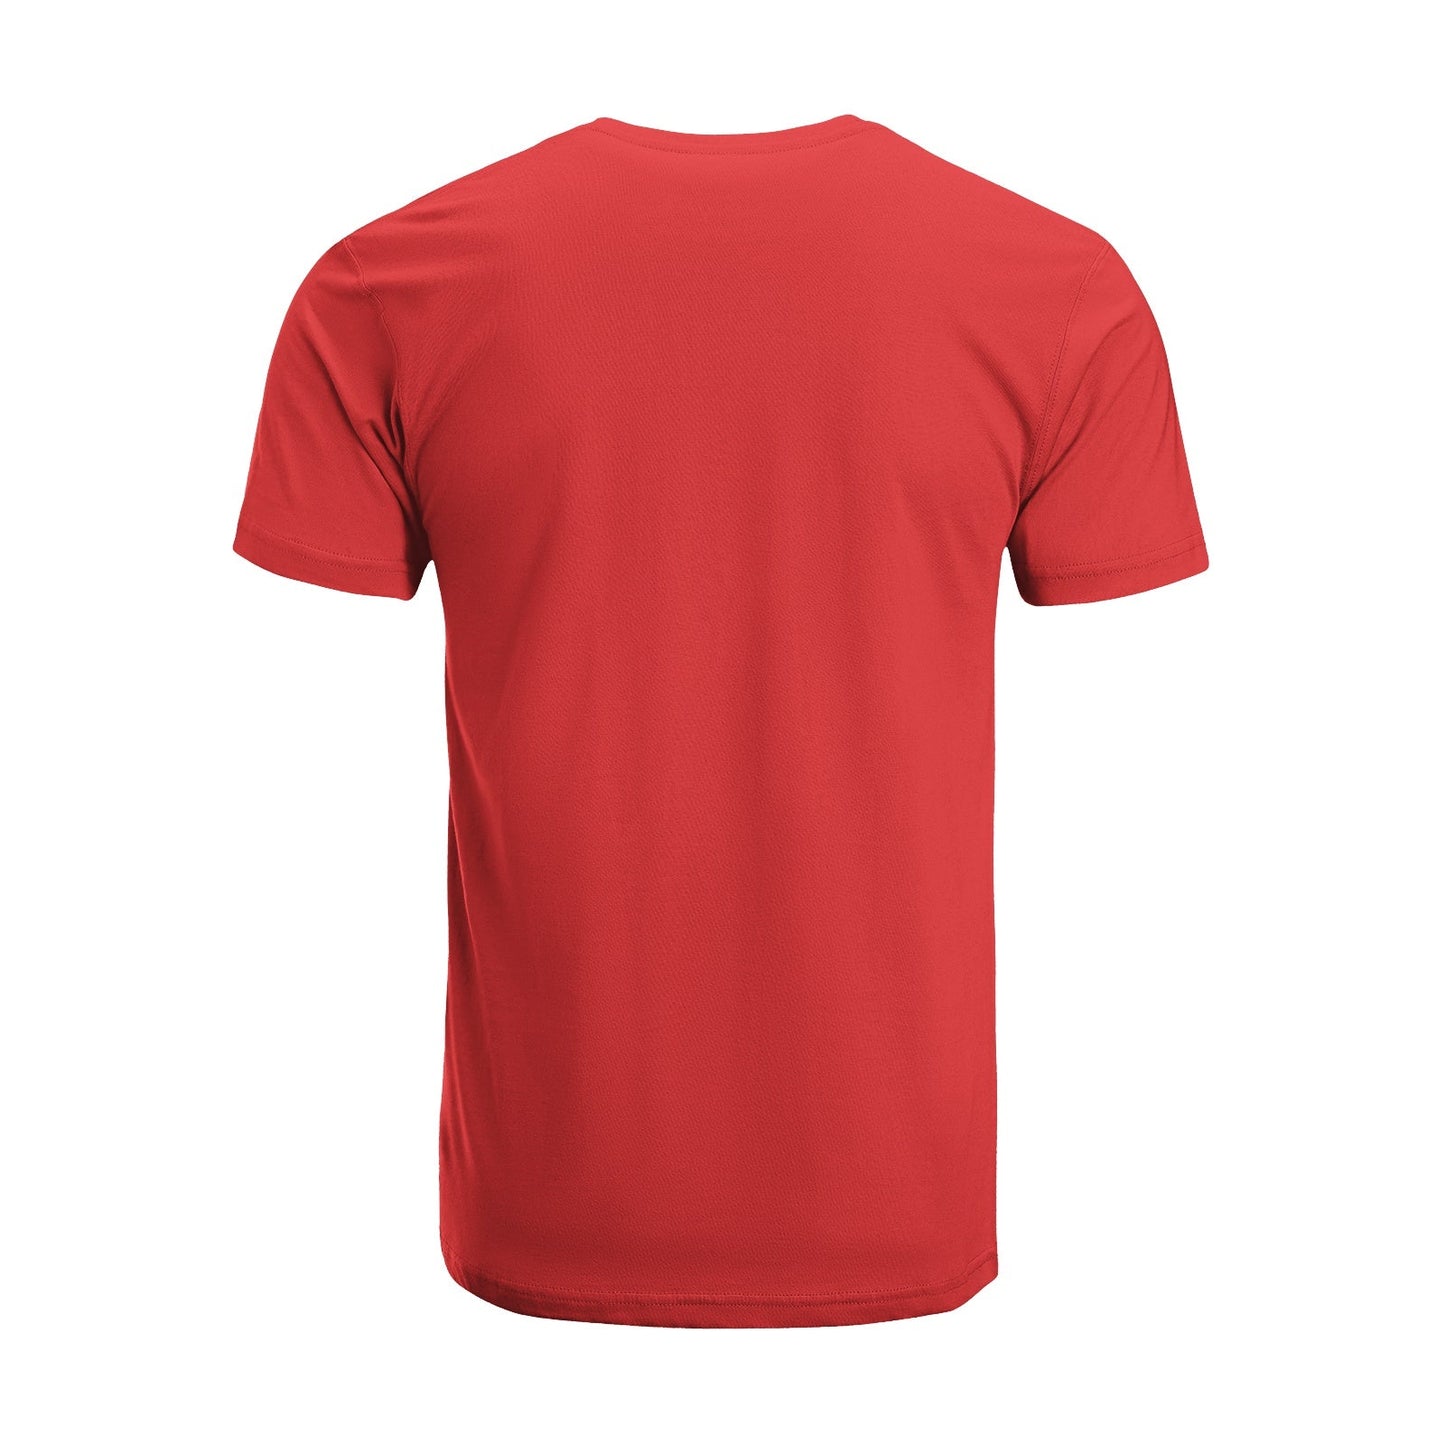 Unisex Short Sleeve Crew Neck Cotton Jersey T-Shirt Gym No. 35 - Tara-Outfits.com